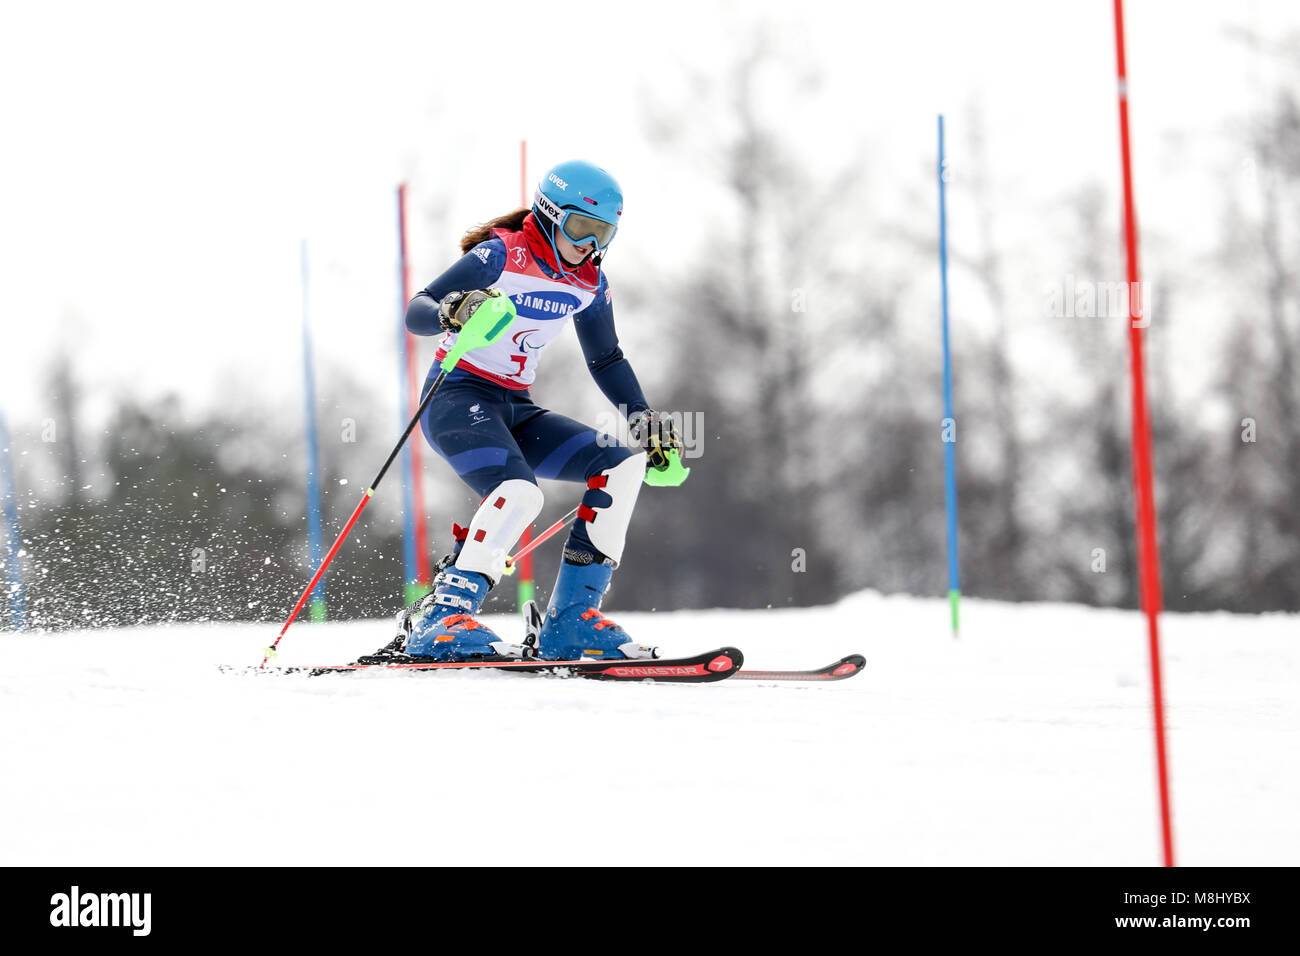 PyeongChang 18 mars . Slalom femmes. Team FR - FITZPATRICK Menna, Guide : KEHOE Jennifer Crédit : Marco Ciccolella/Alamy Live News Banque D'Images